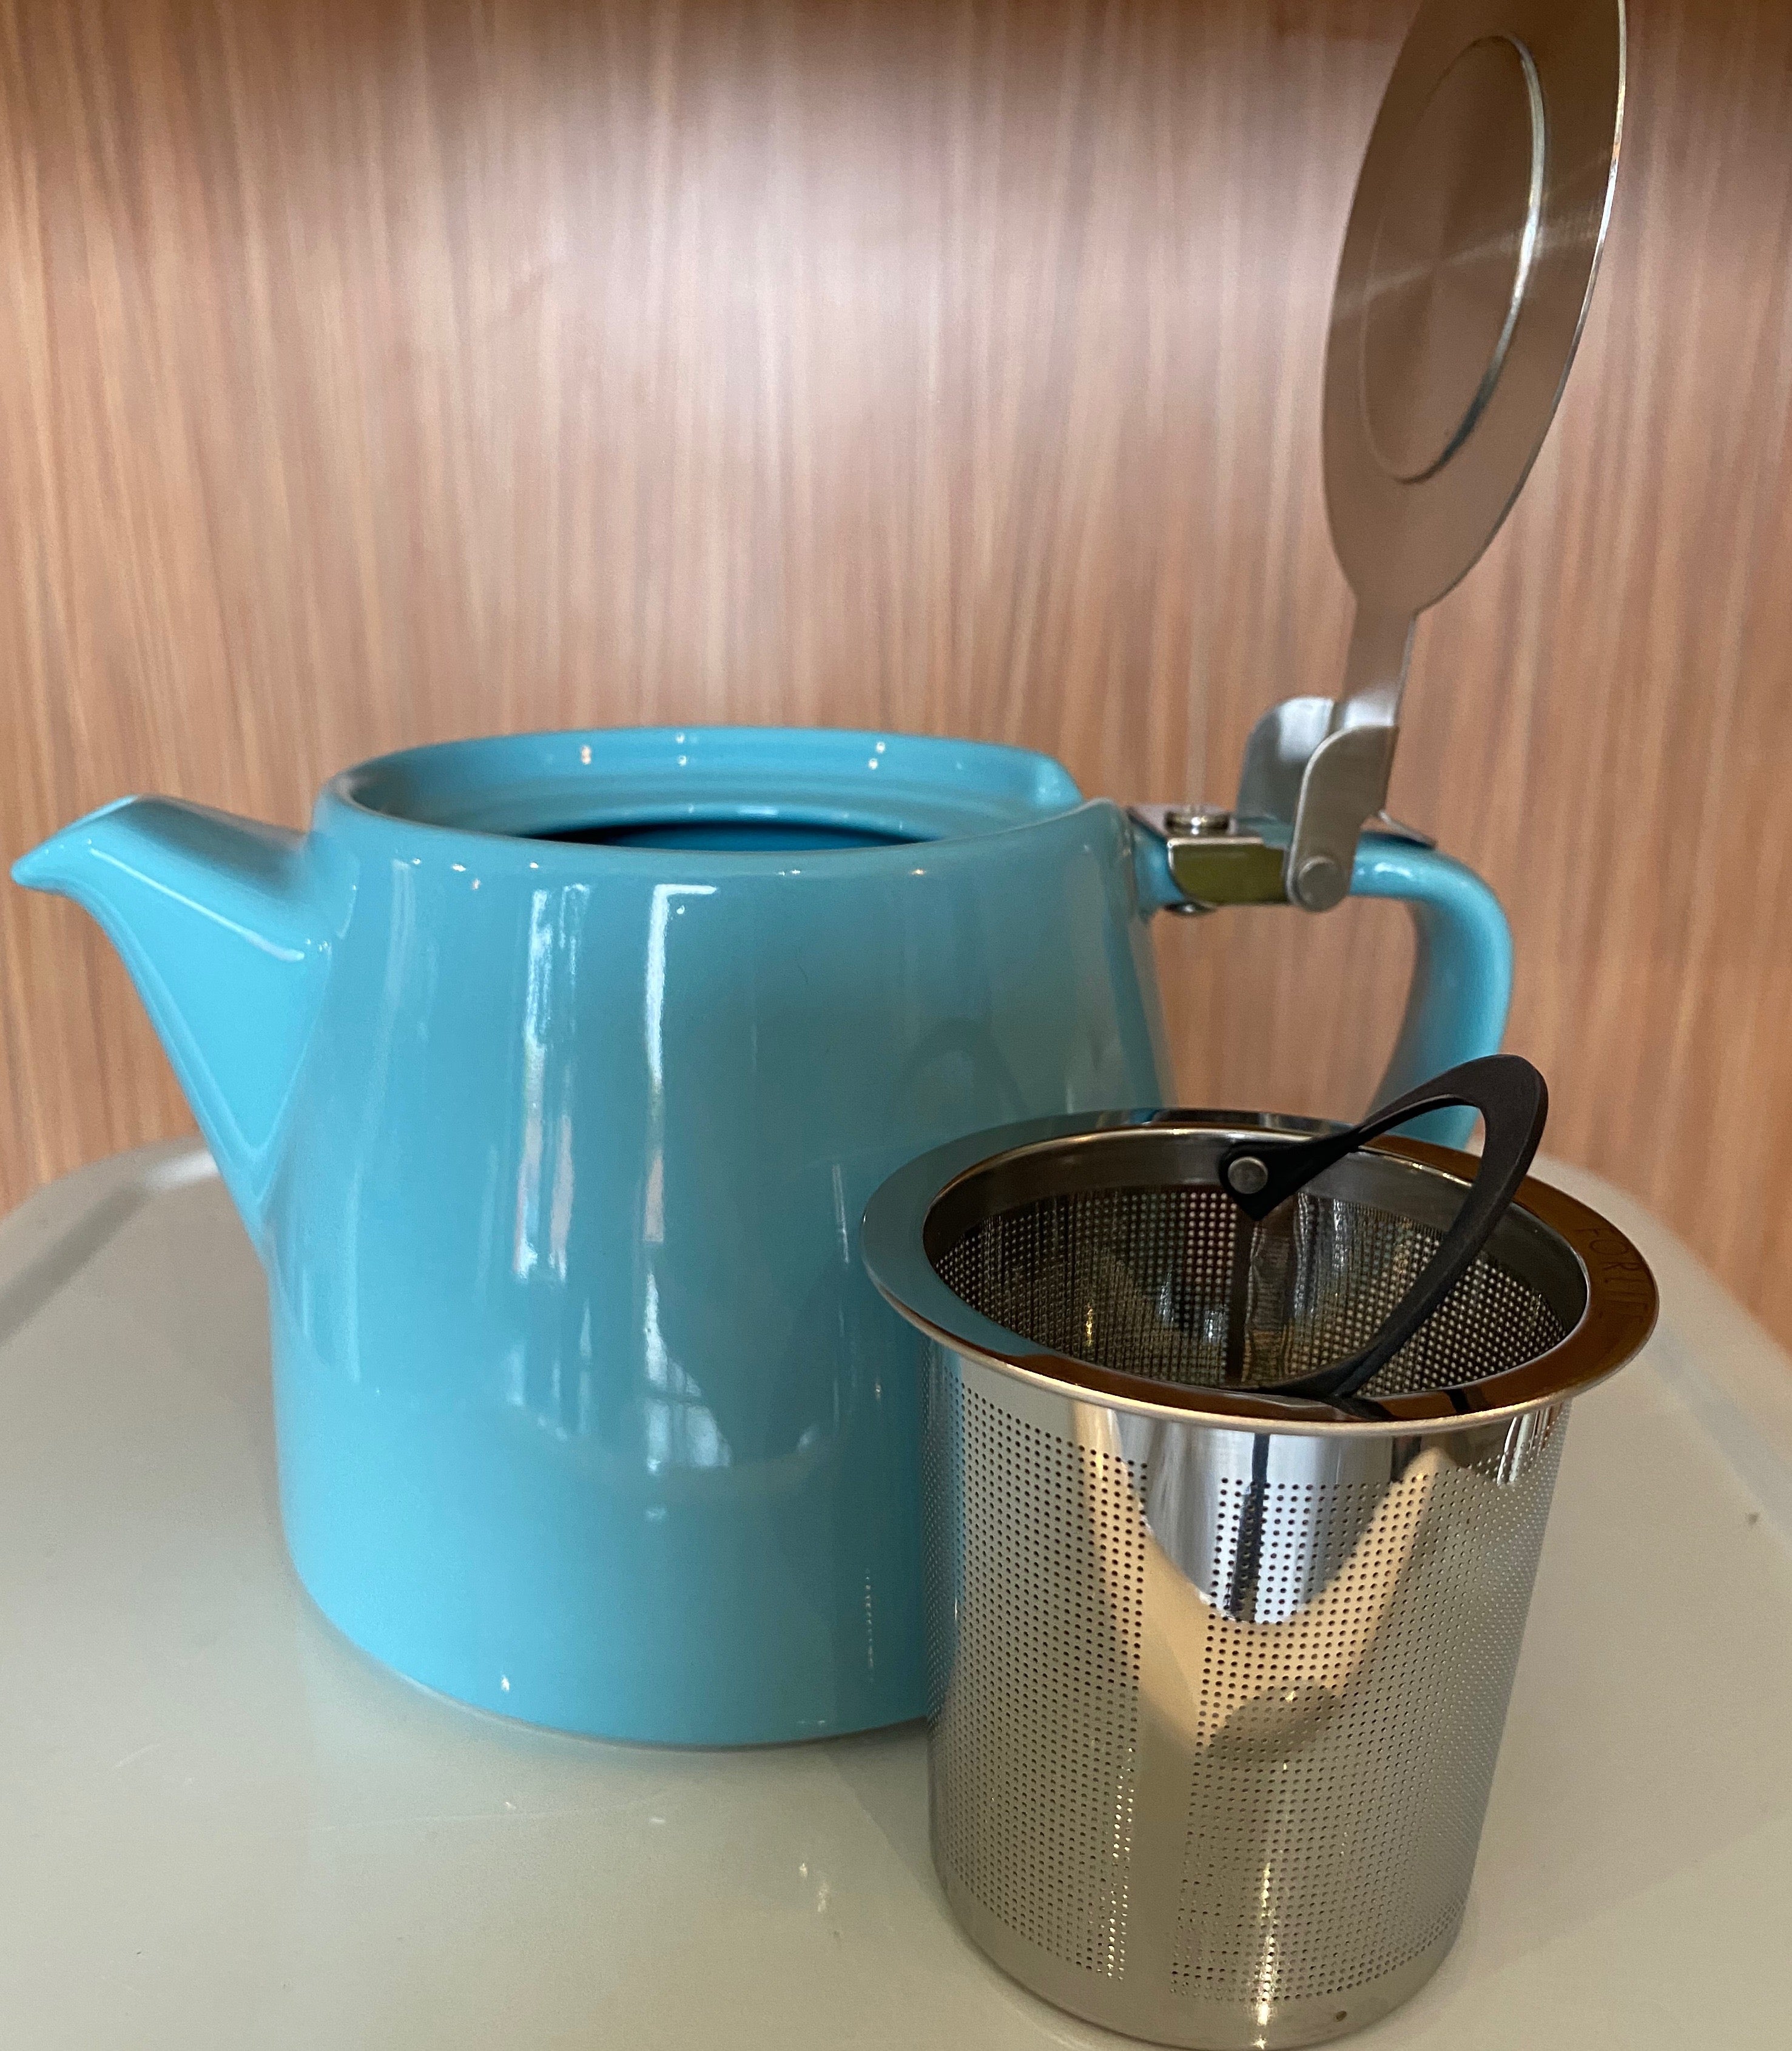 Turquoise stump teapot, For Life brand